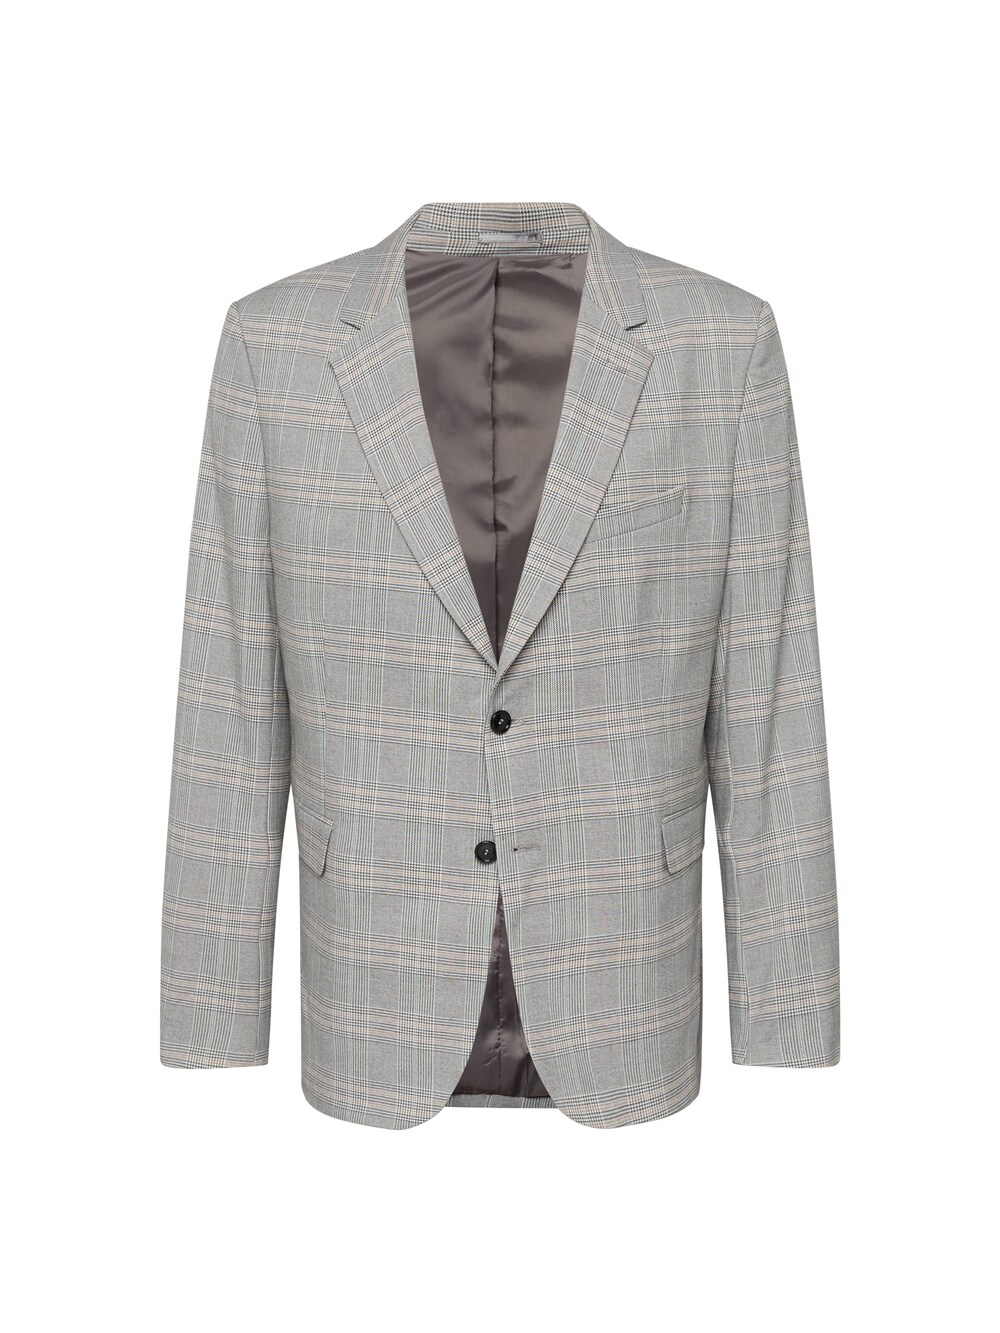 Пиджак узкого кроя BURTON MENSWEAR LONDON, серый/светло-серый